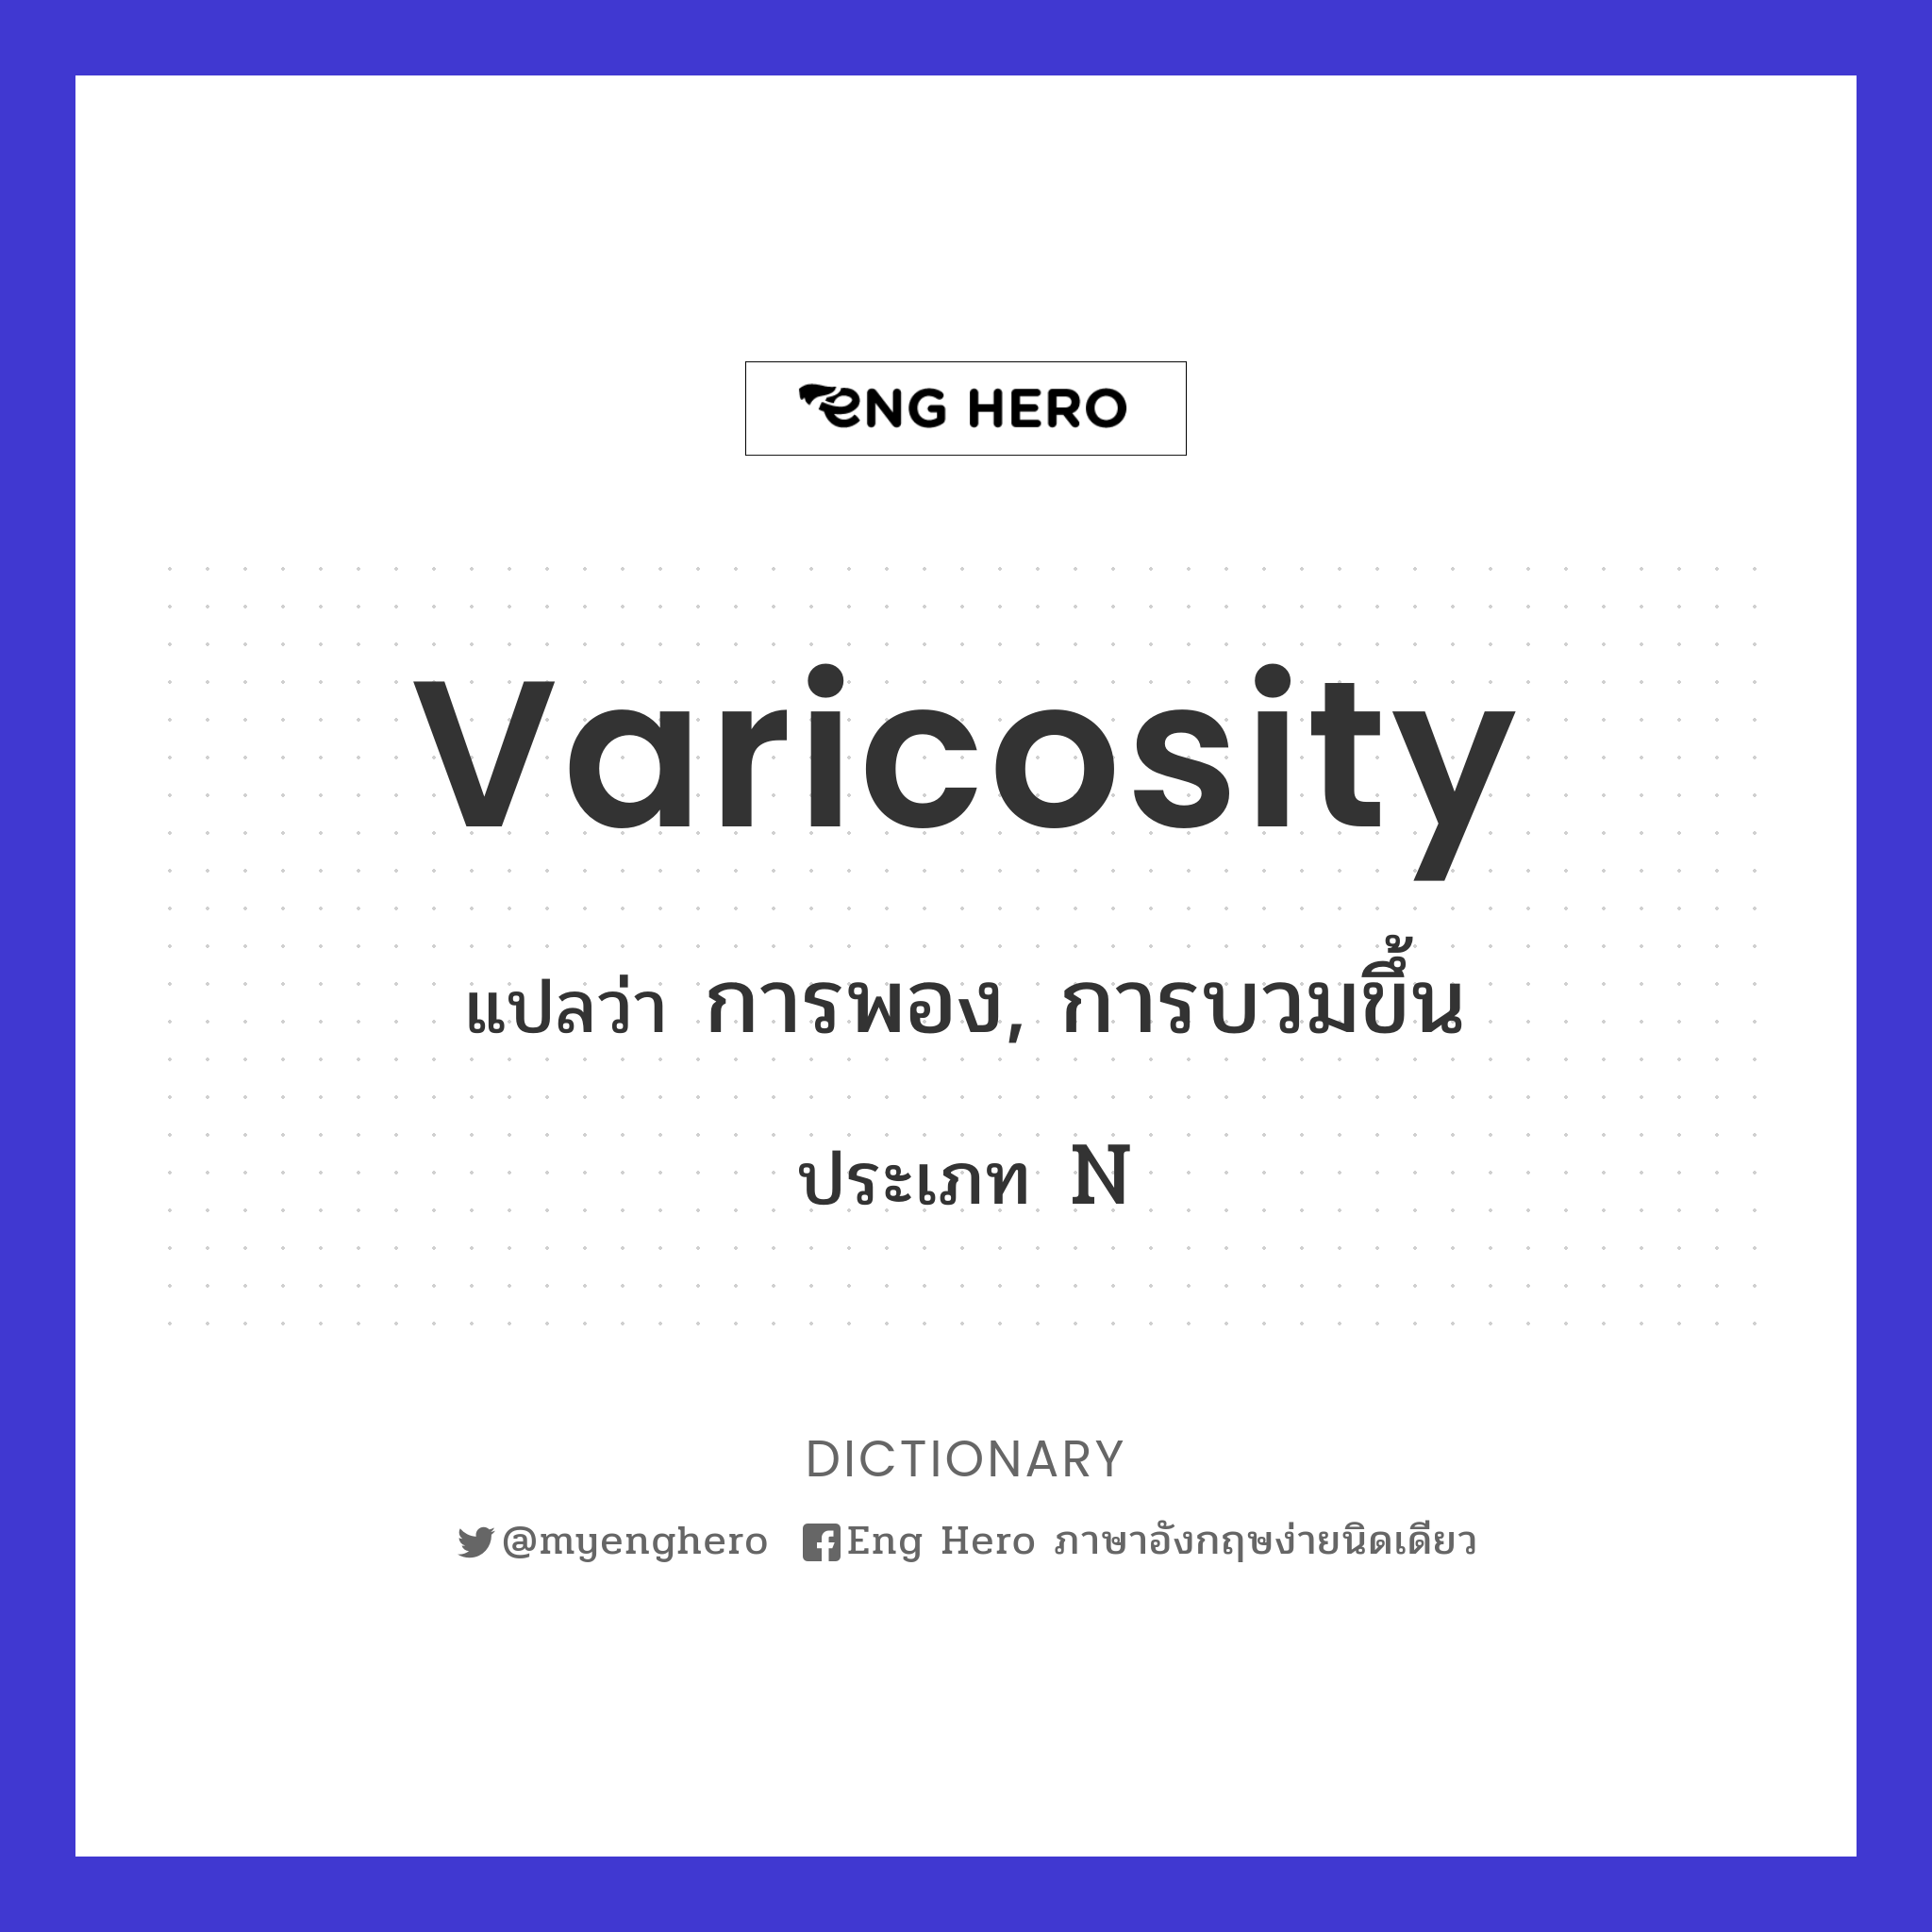 varicosity